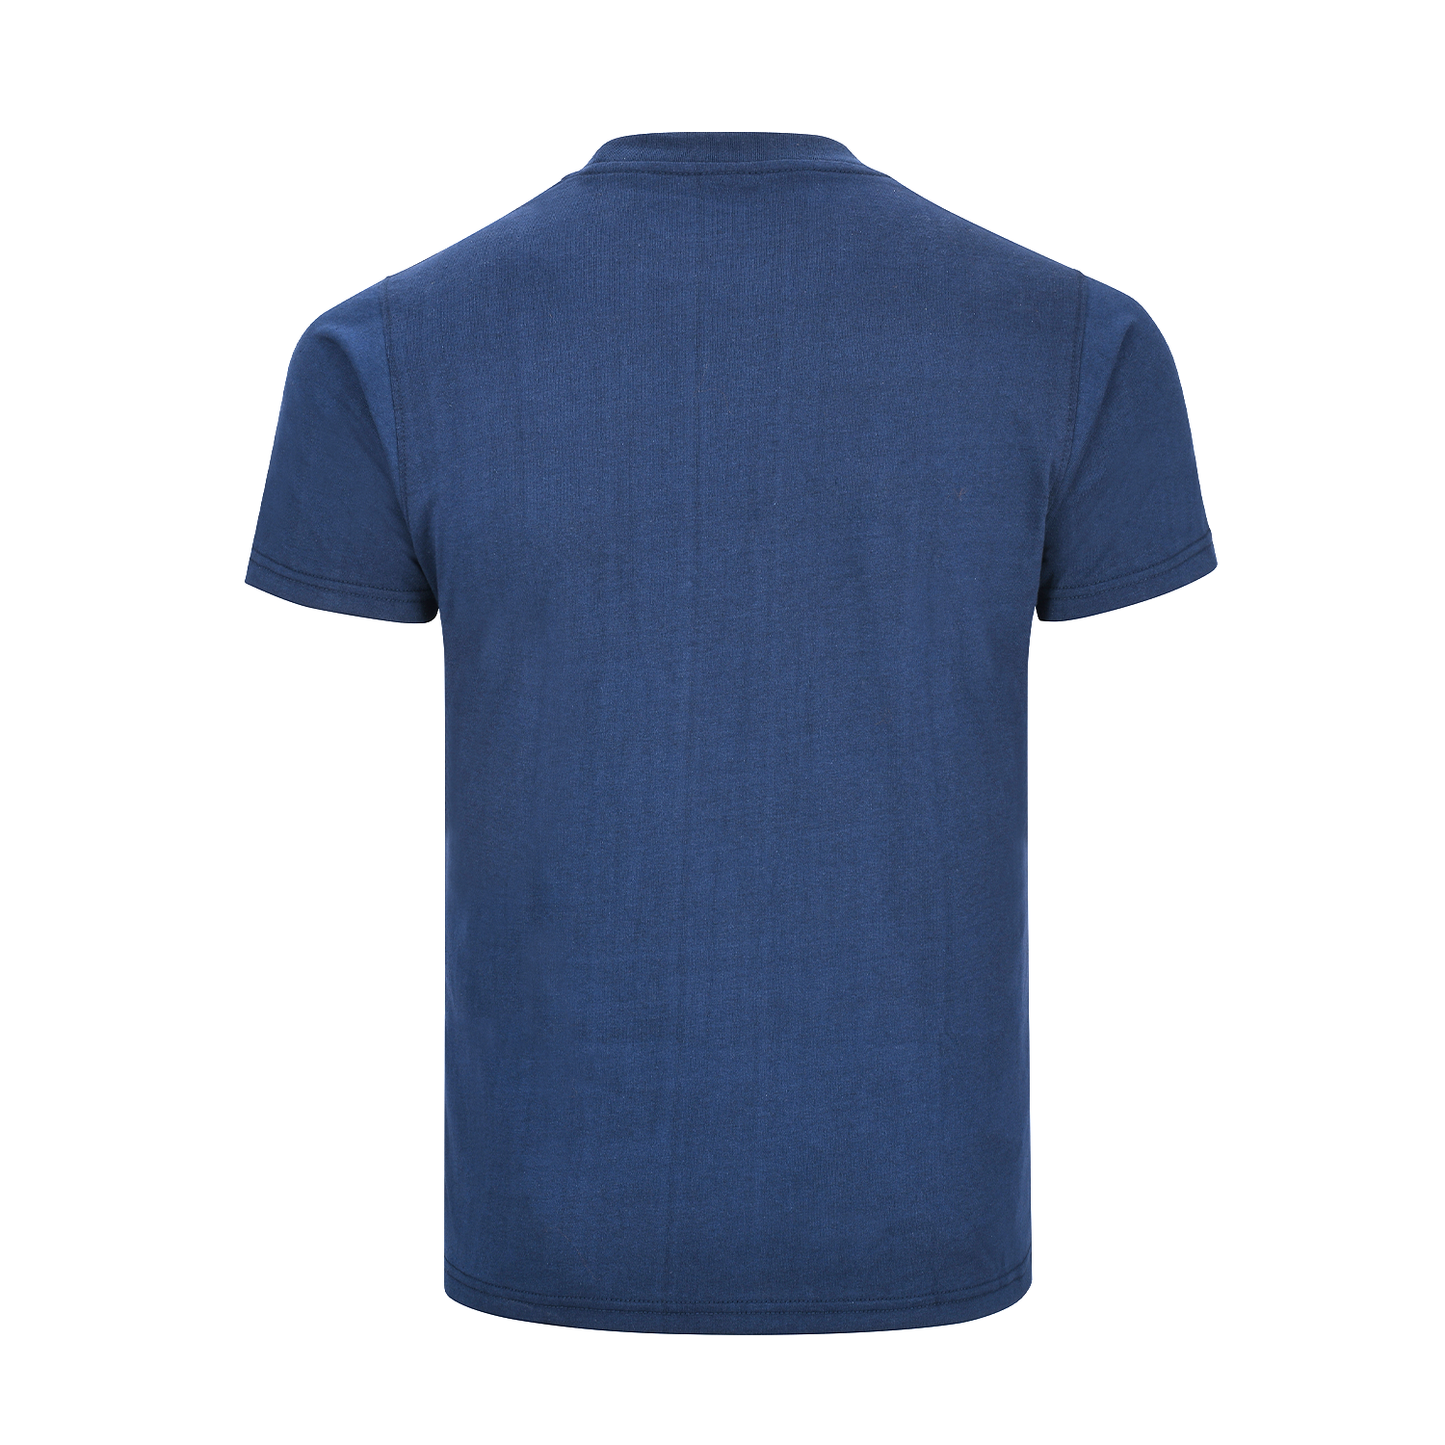 Round Neck Polycotton 180Gsm Premium Work T-Shirts Jersey - Sizes S-XXL